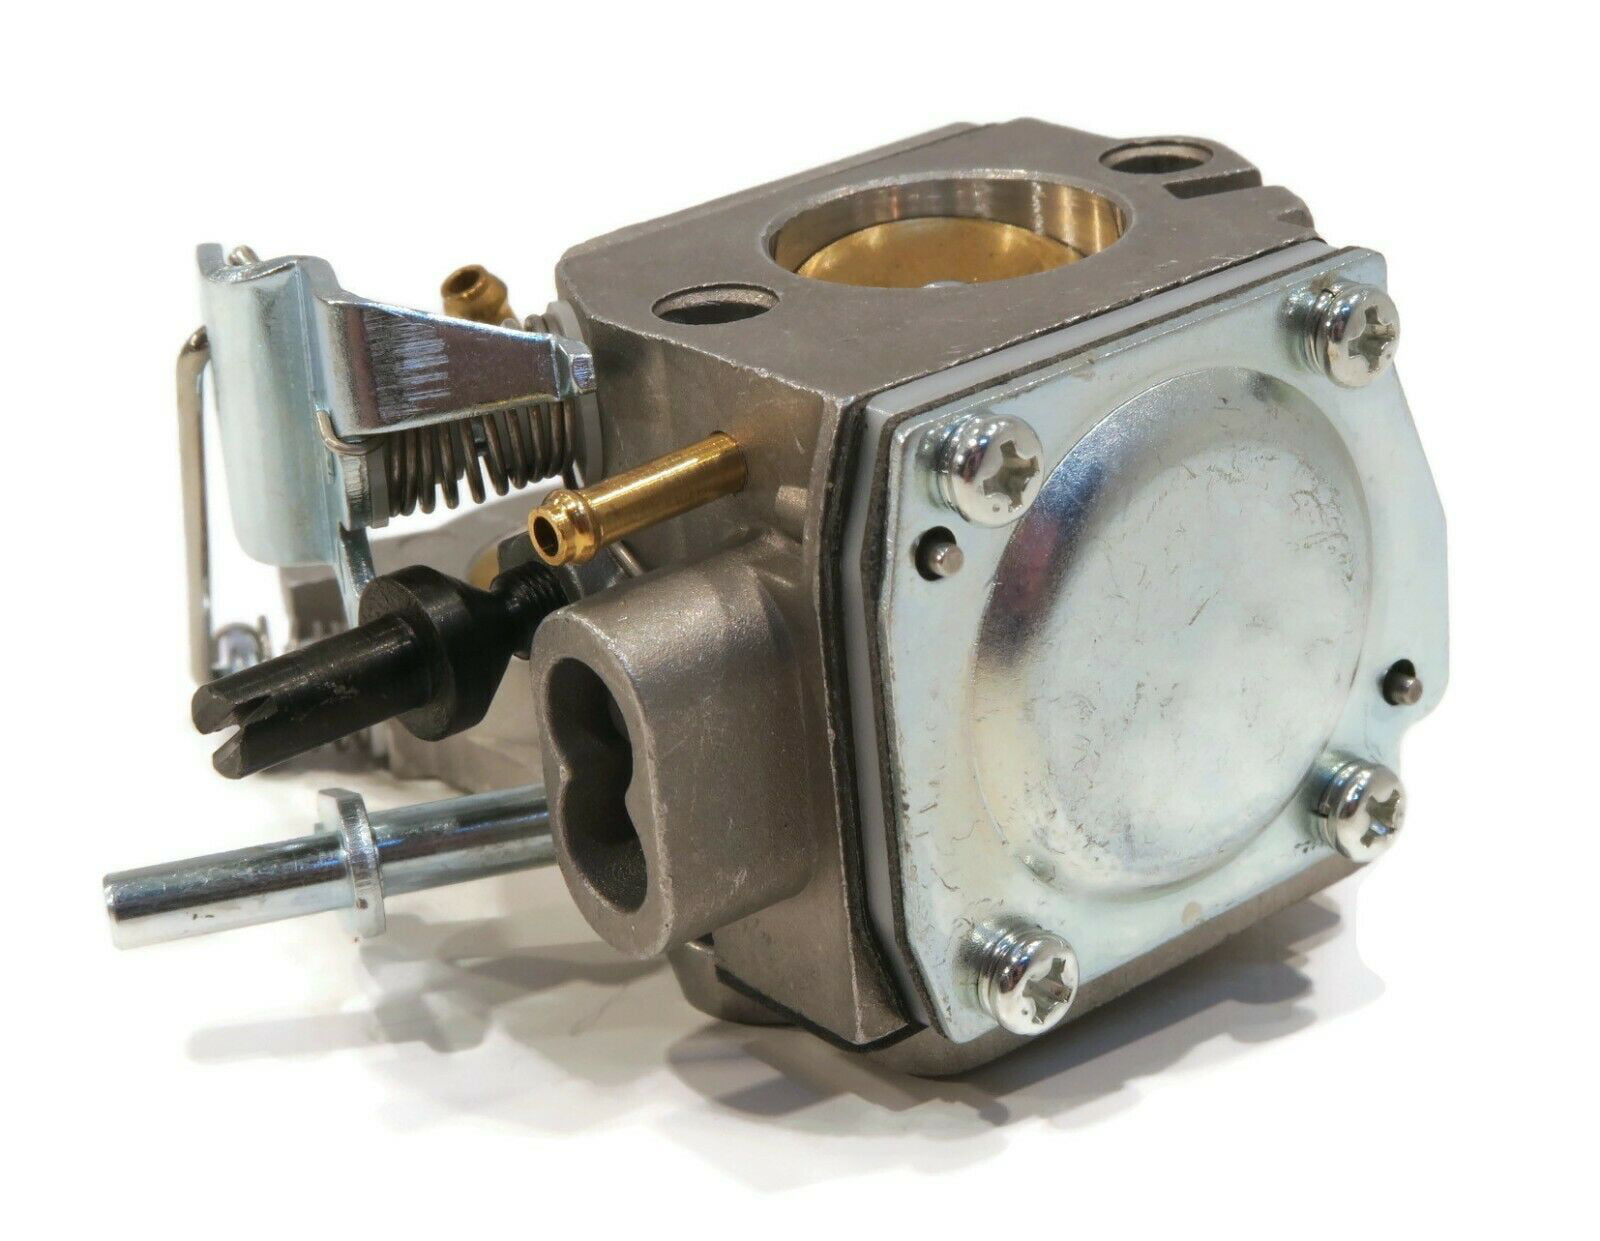 K770 Power Cutter Cut-Off Saws Carburetor with Gaskets for Husqvarna K750 K760